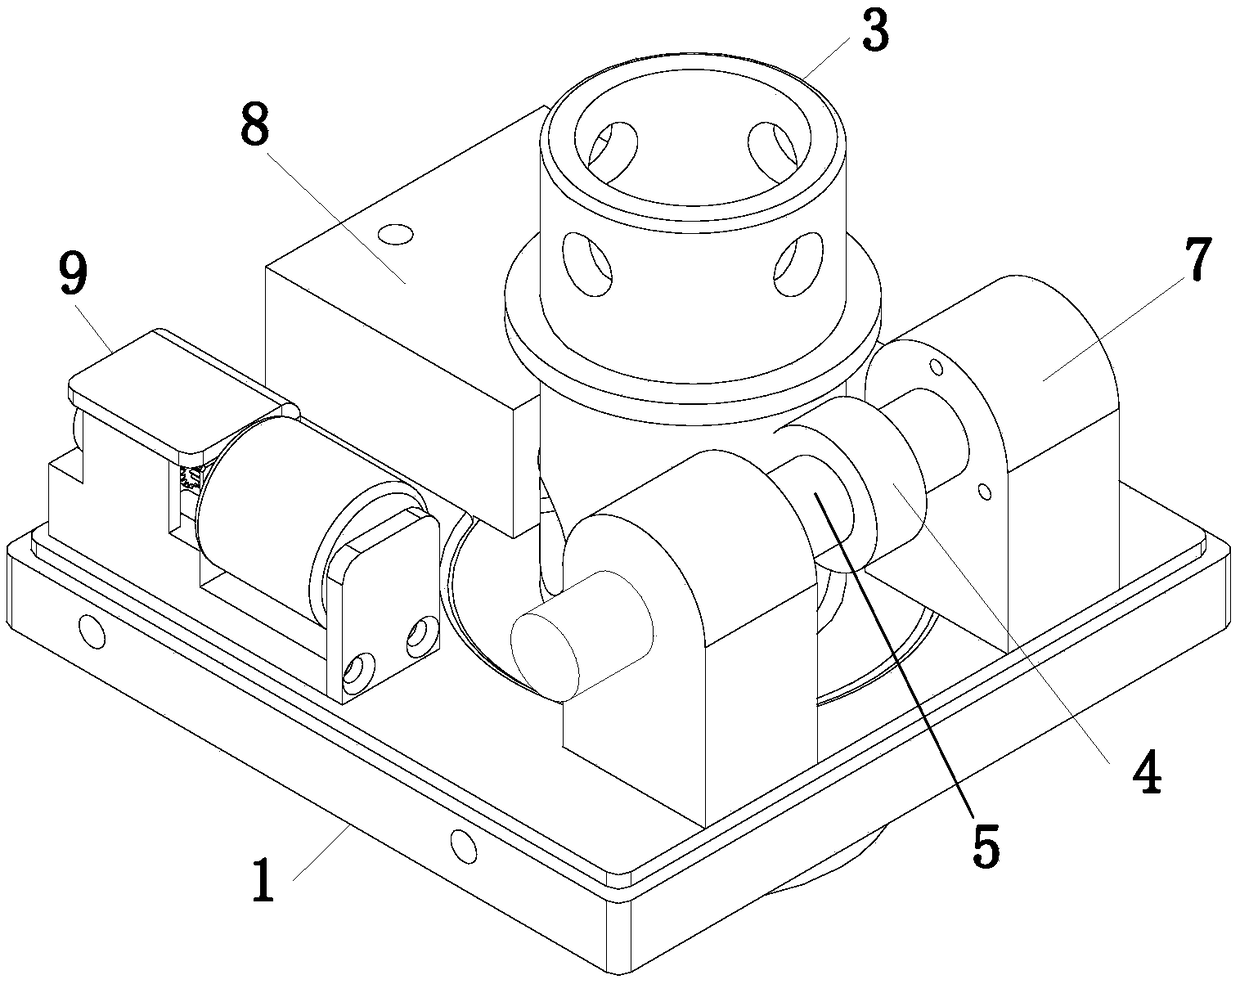 Gate valve locking mechanism